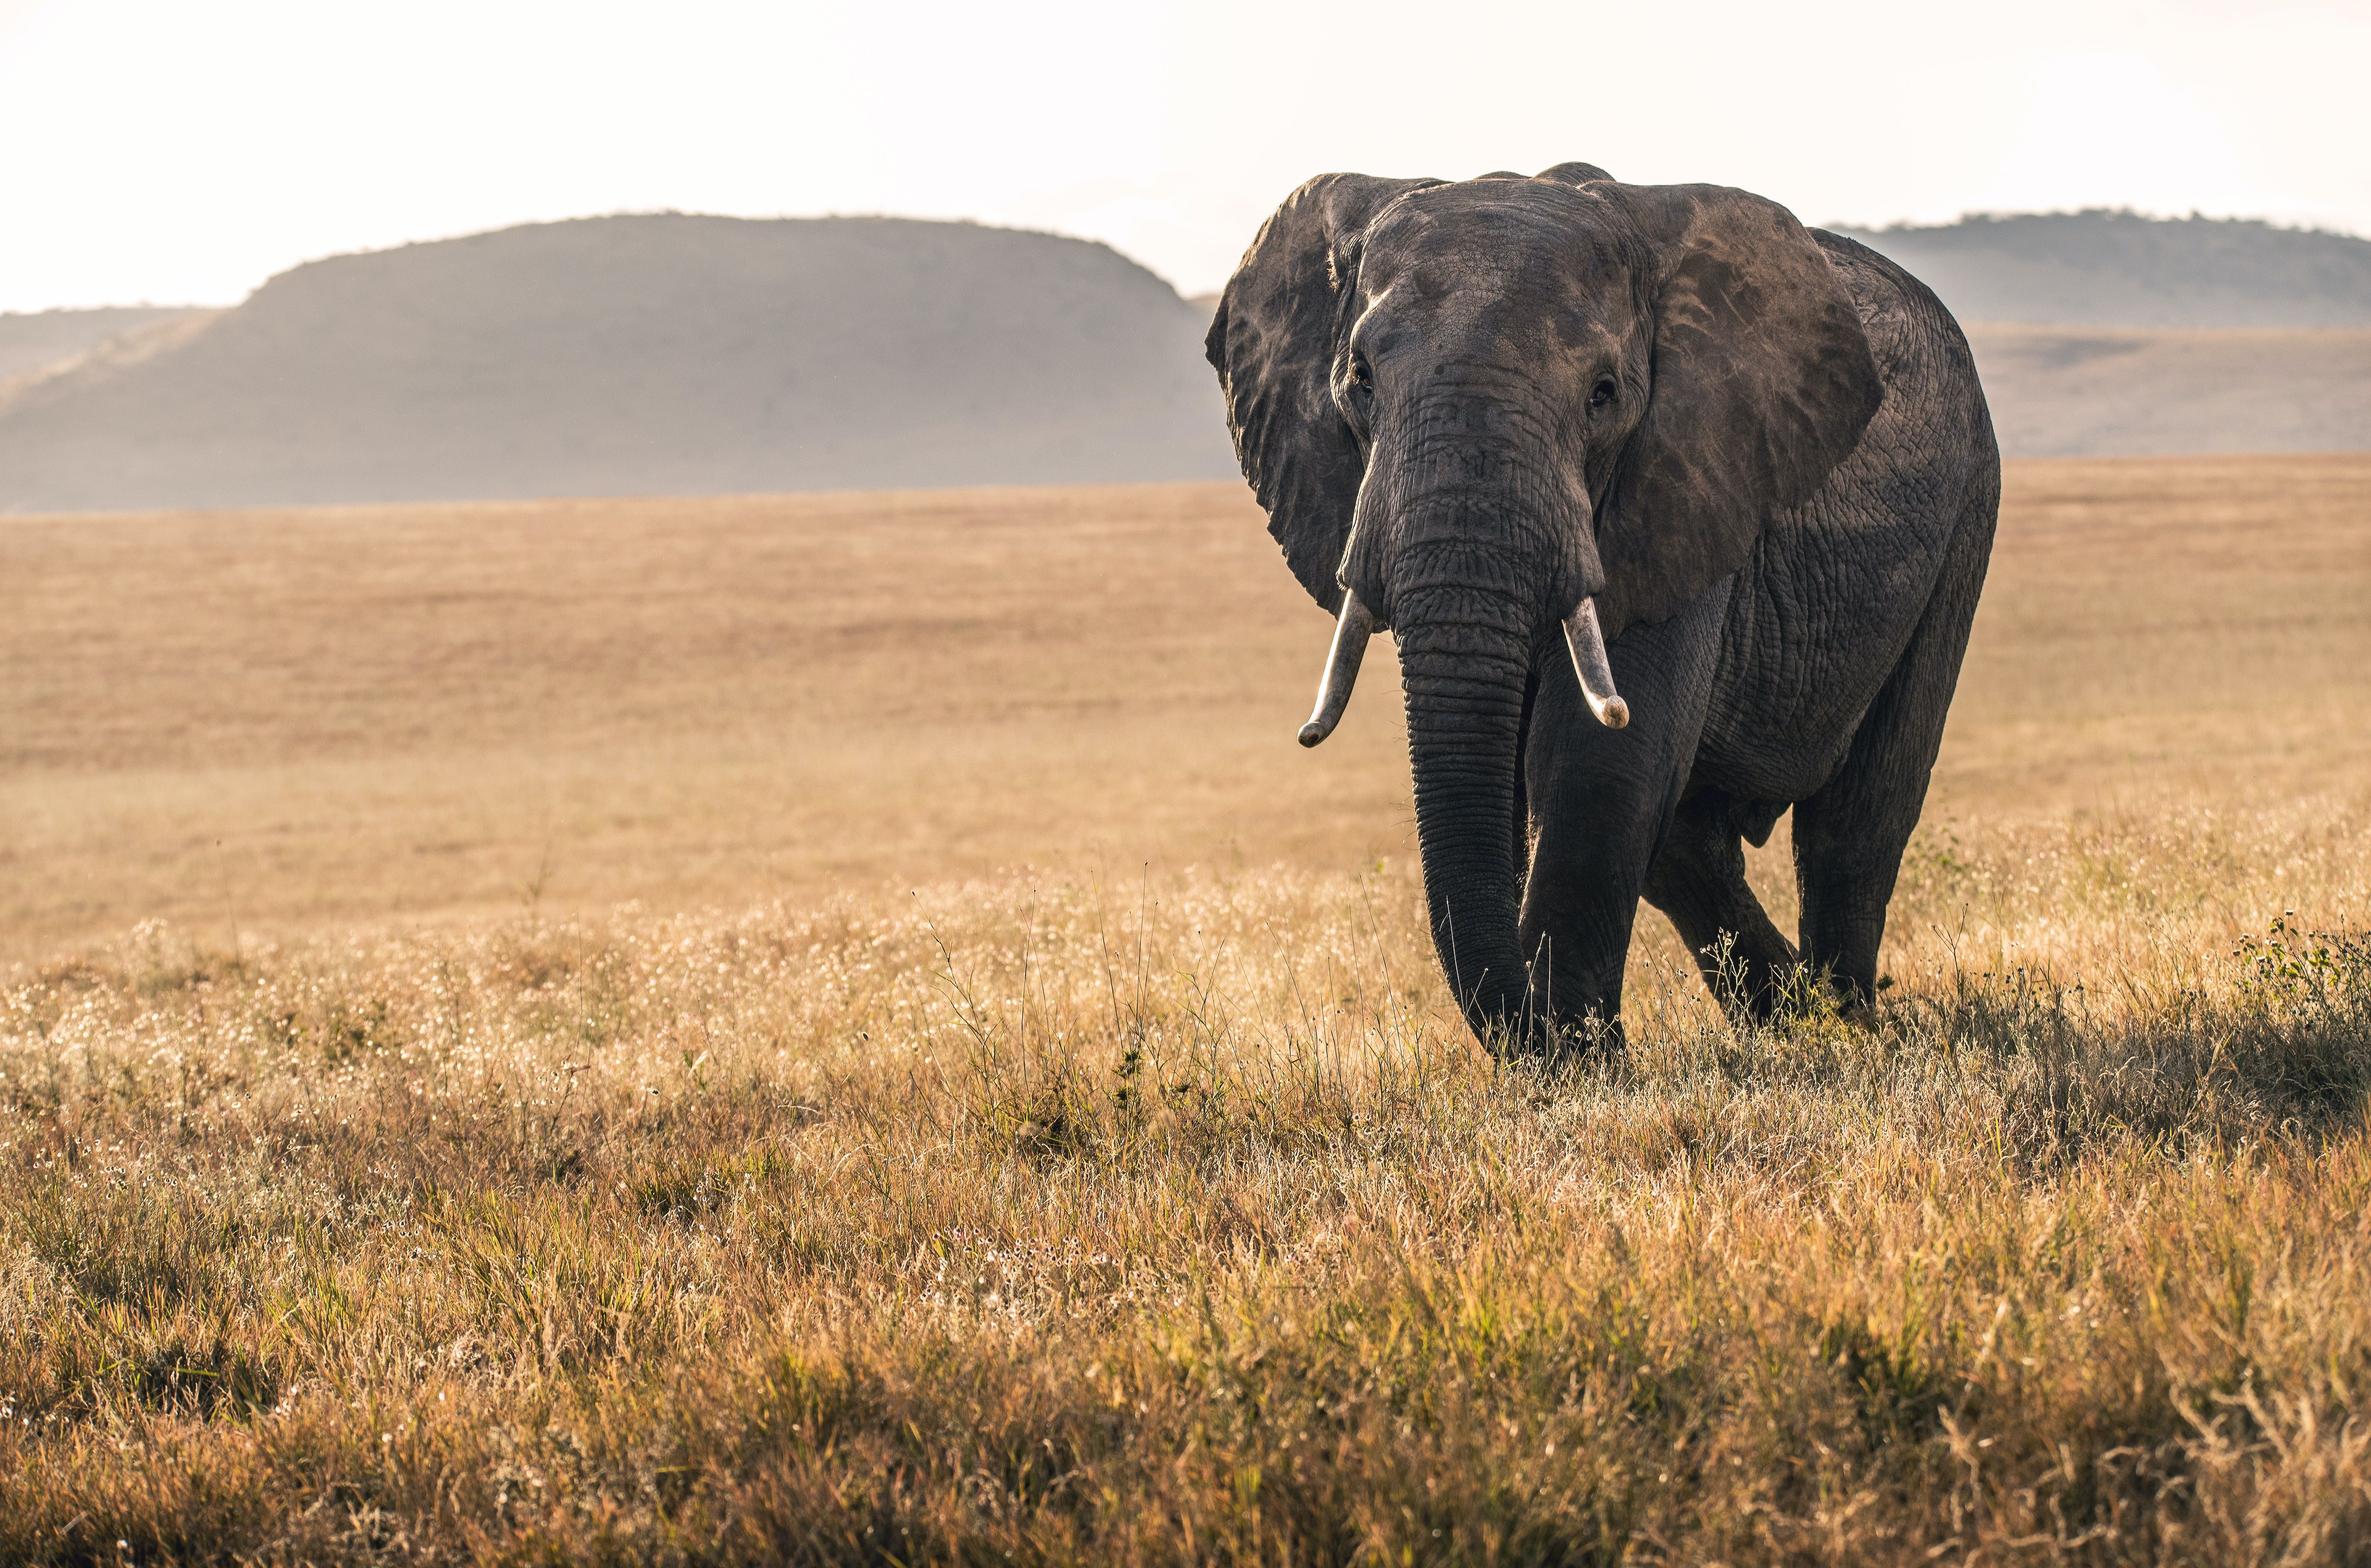 Tour Amigo transitions to an elephant-friendly future